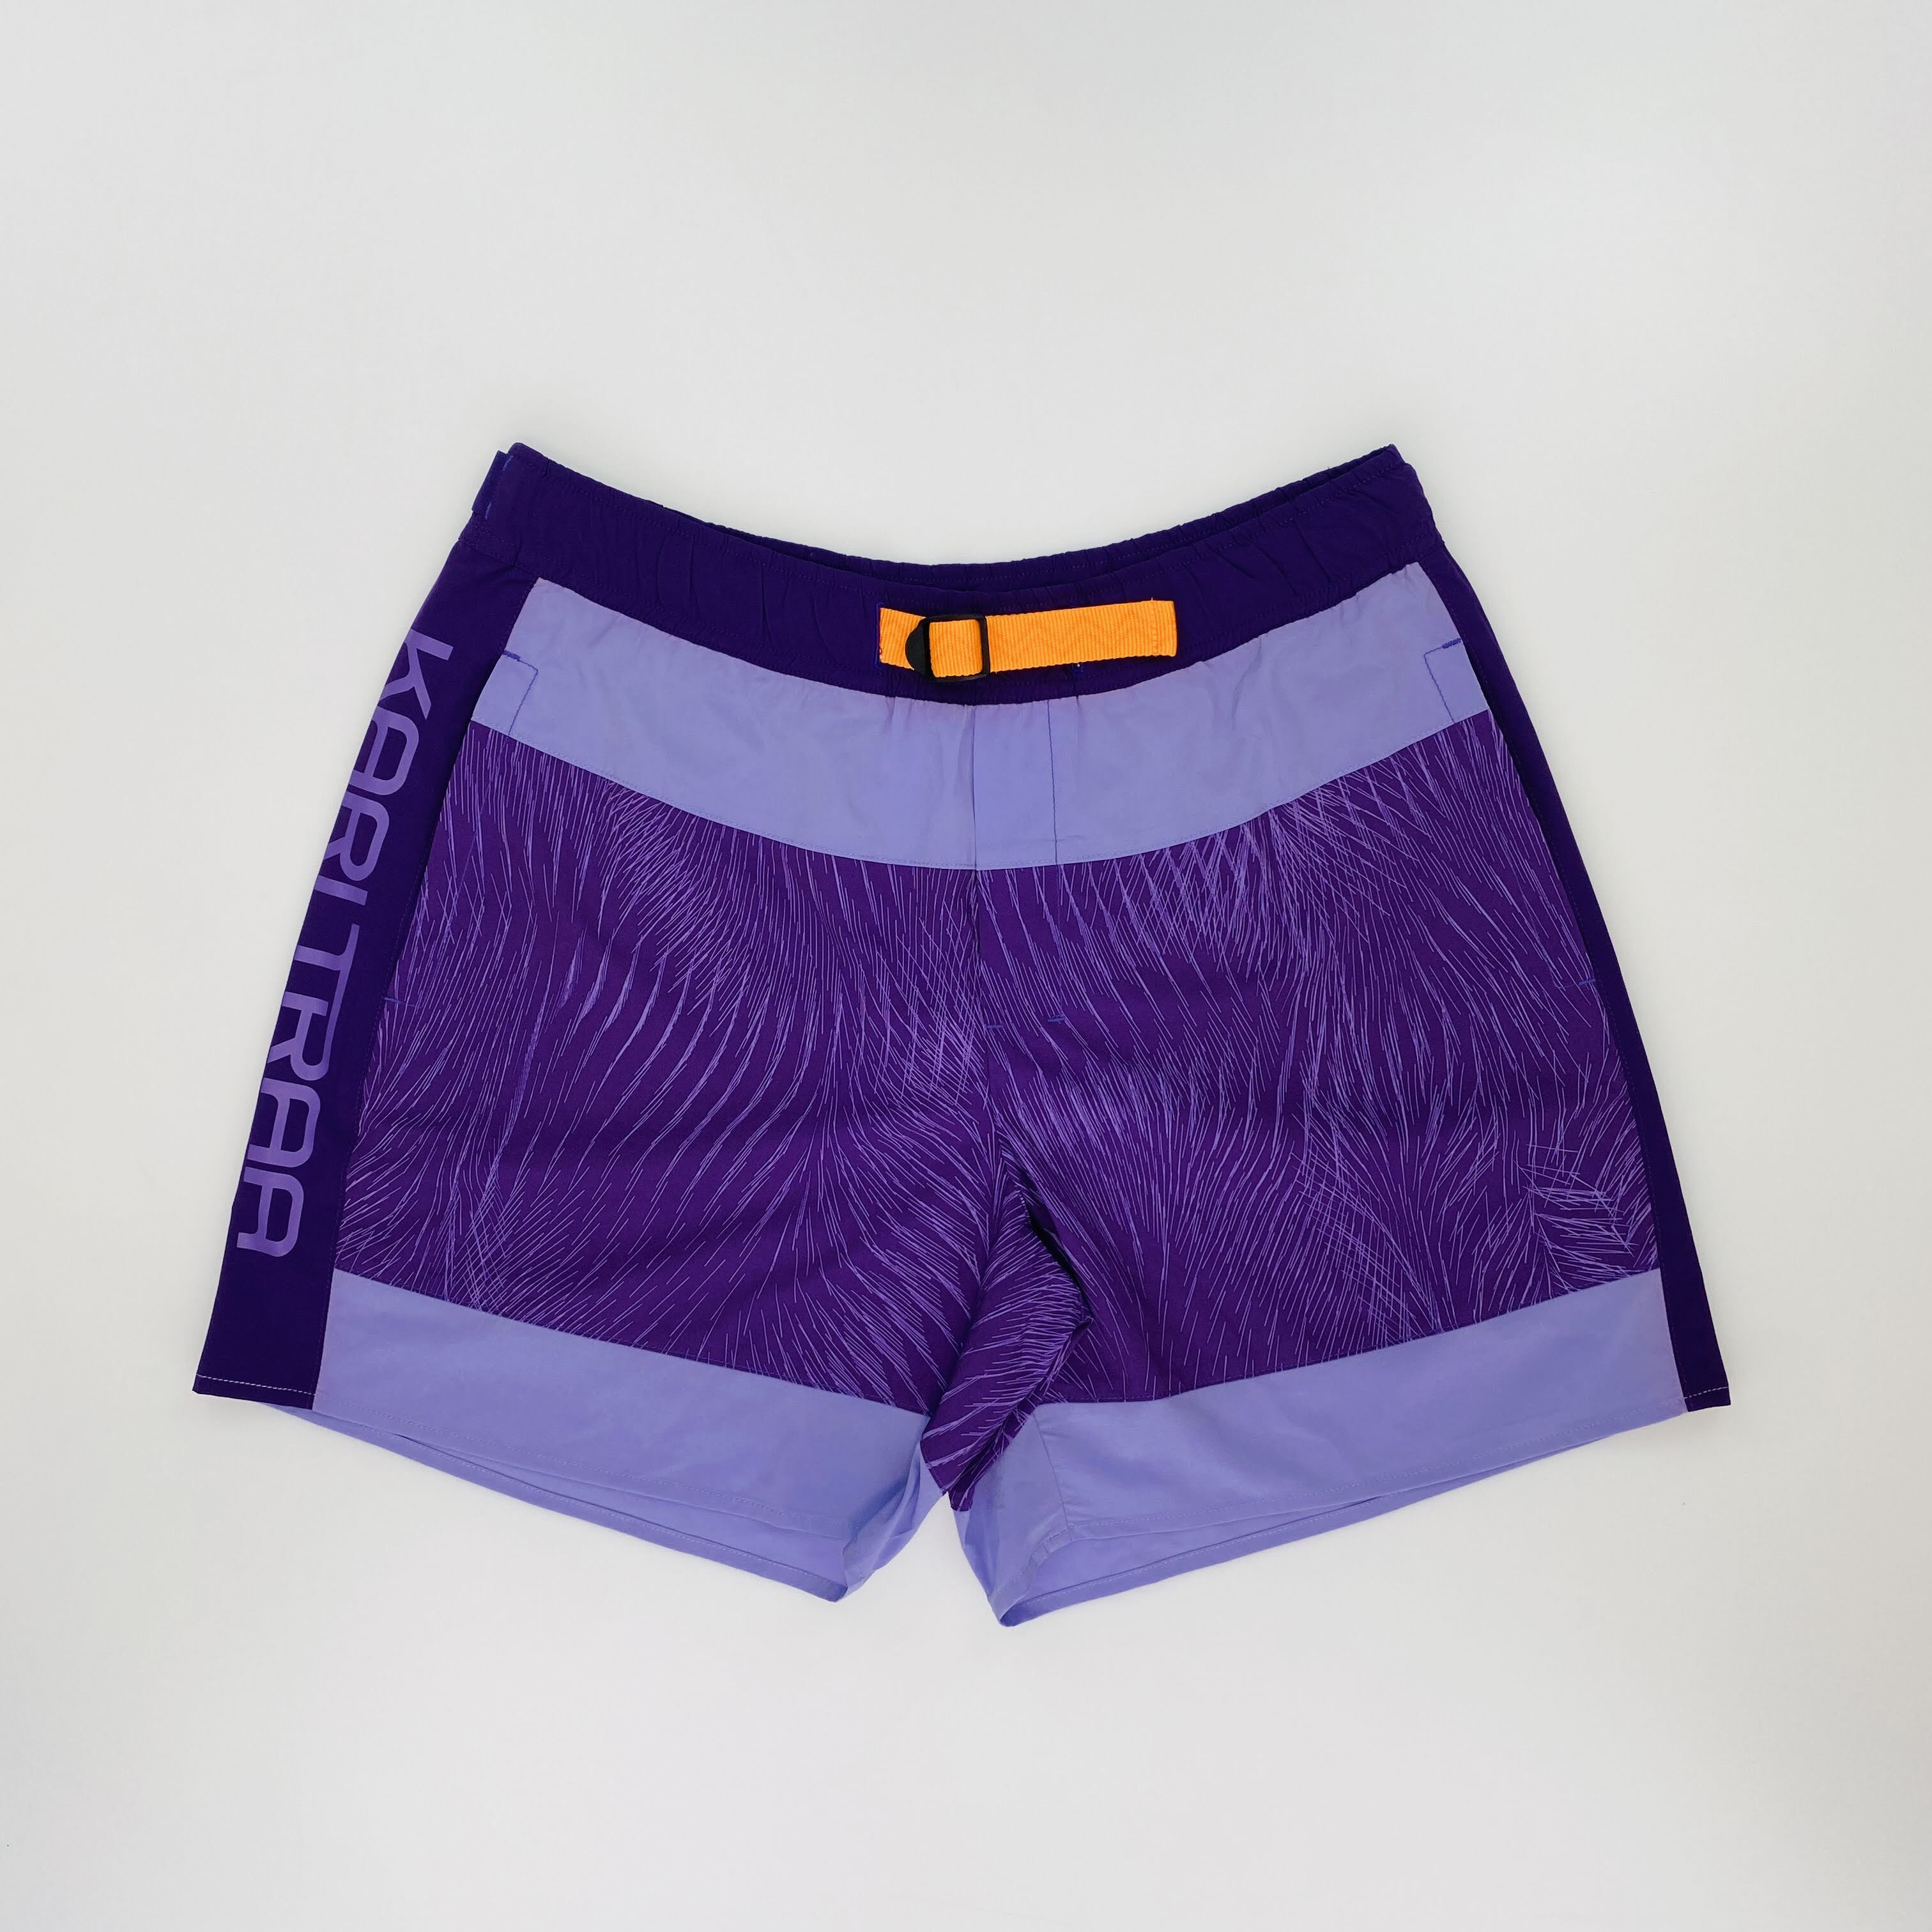 Kari Traa Ane Shorts - Second Hand Shorts - Women's - Purple - M | Hardloop